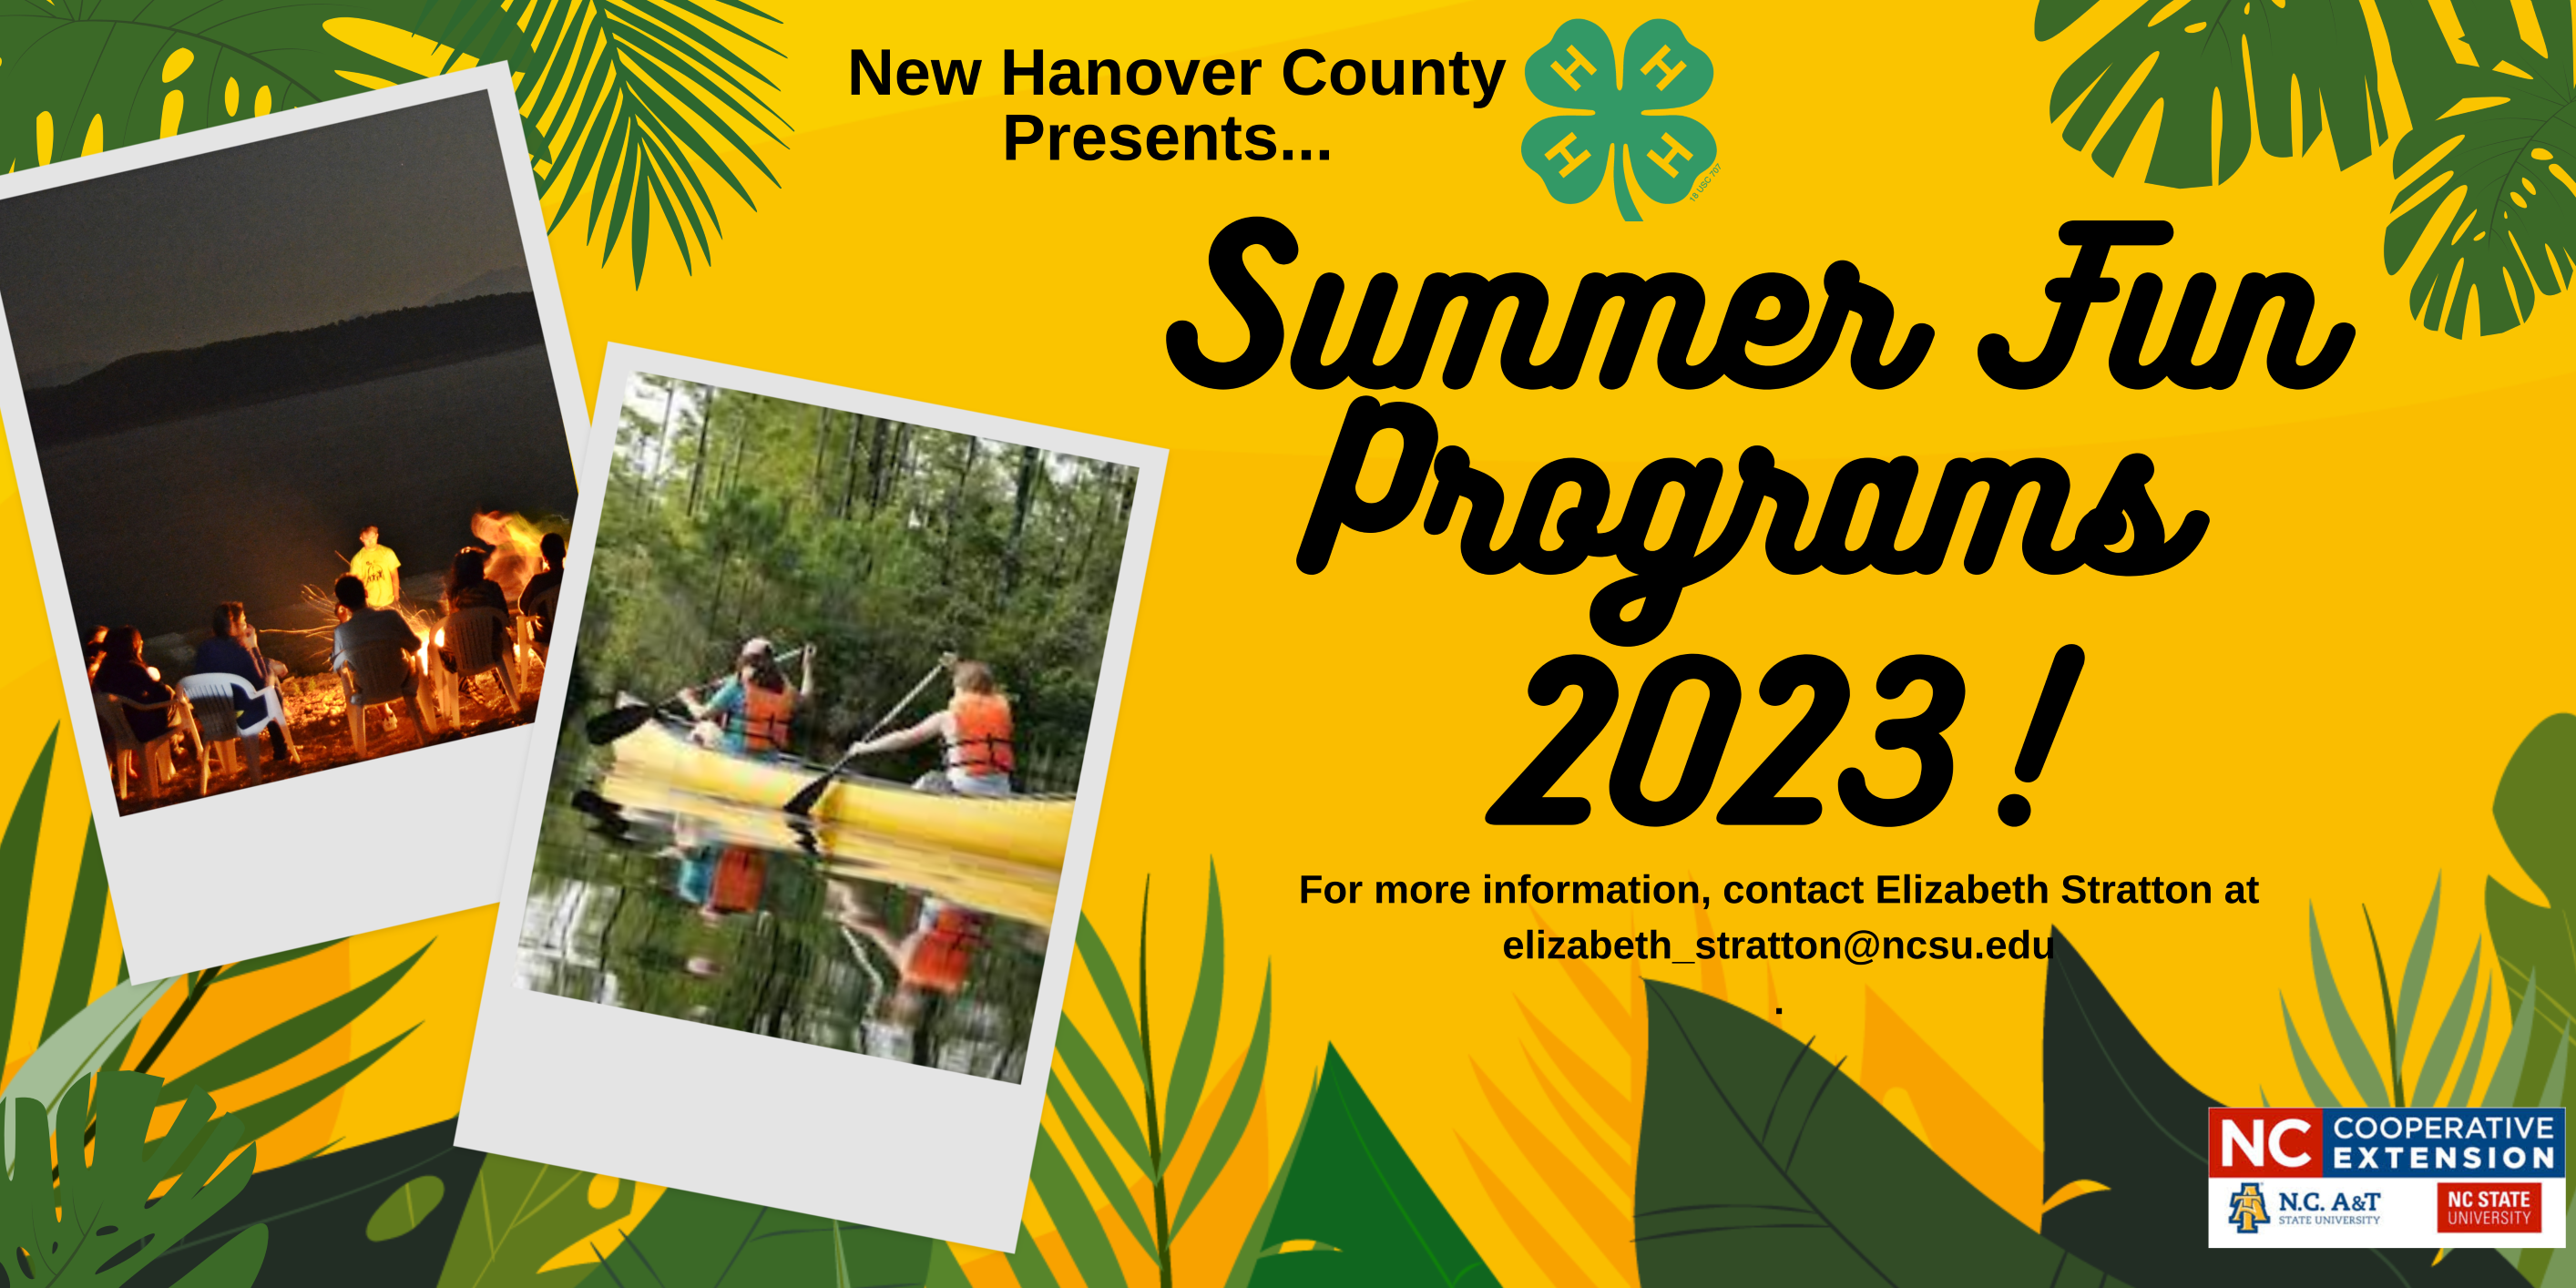 NHC 4-H Summer Fun Programs 2023 Flyer